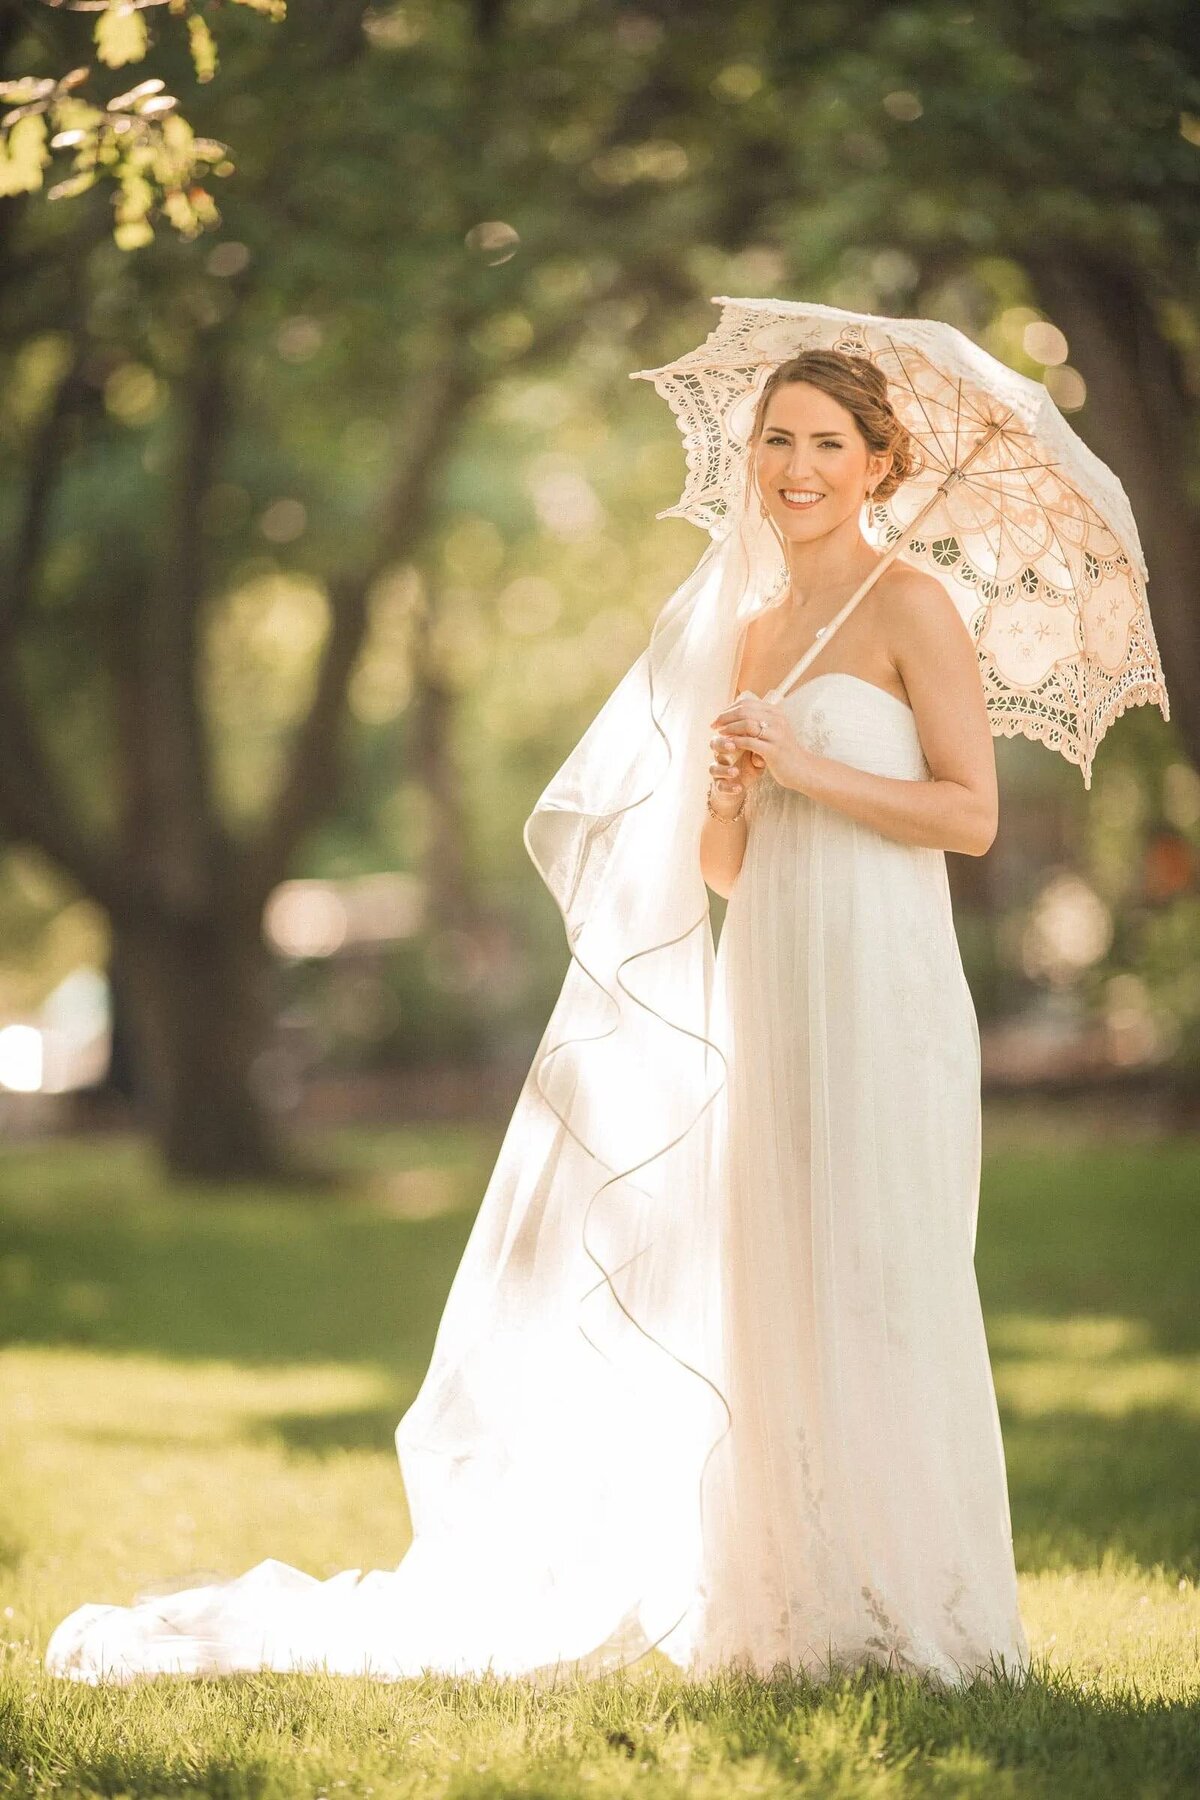 A bride smiling and holding a decorative umbrella